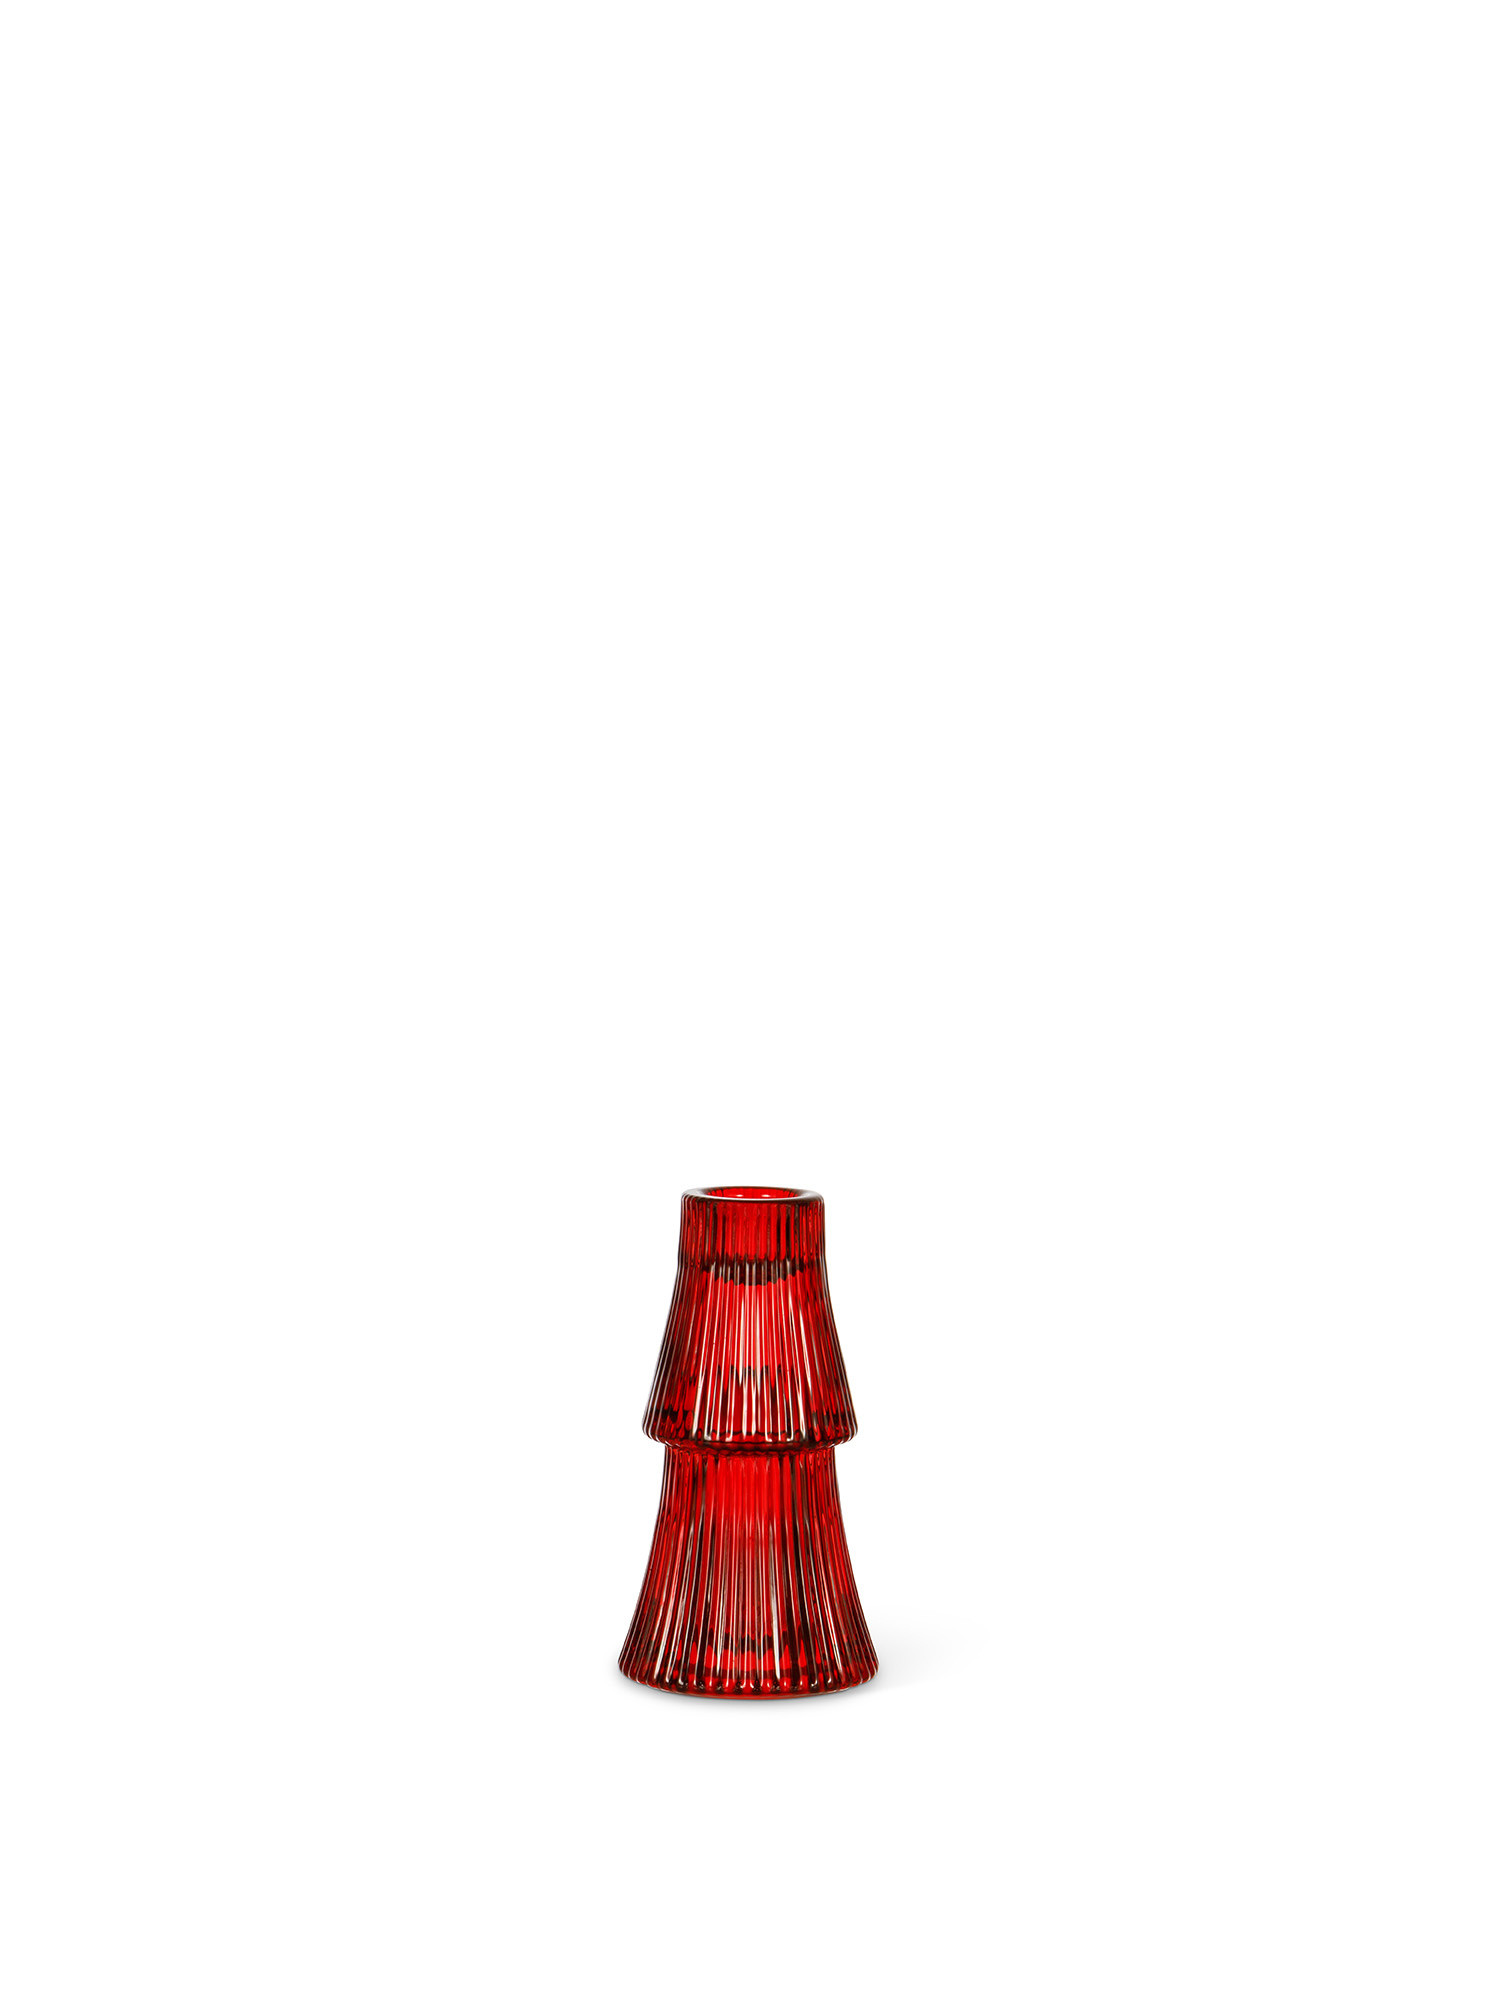 Portacandele in vetro, Rosso fragola, large image number 0